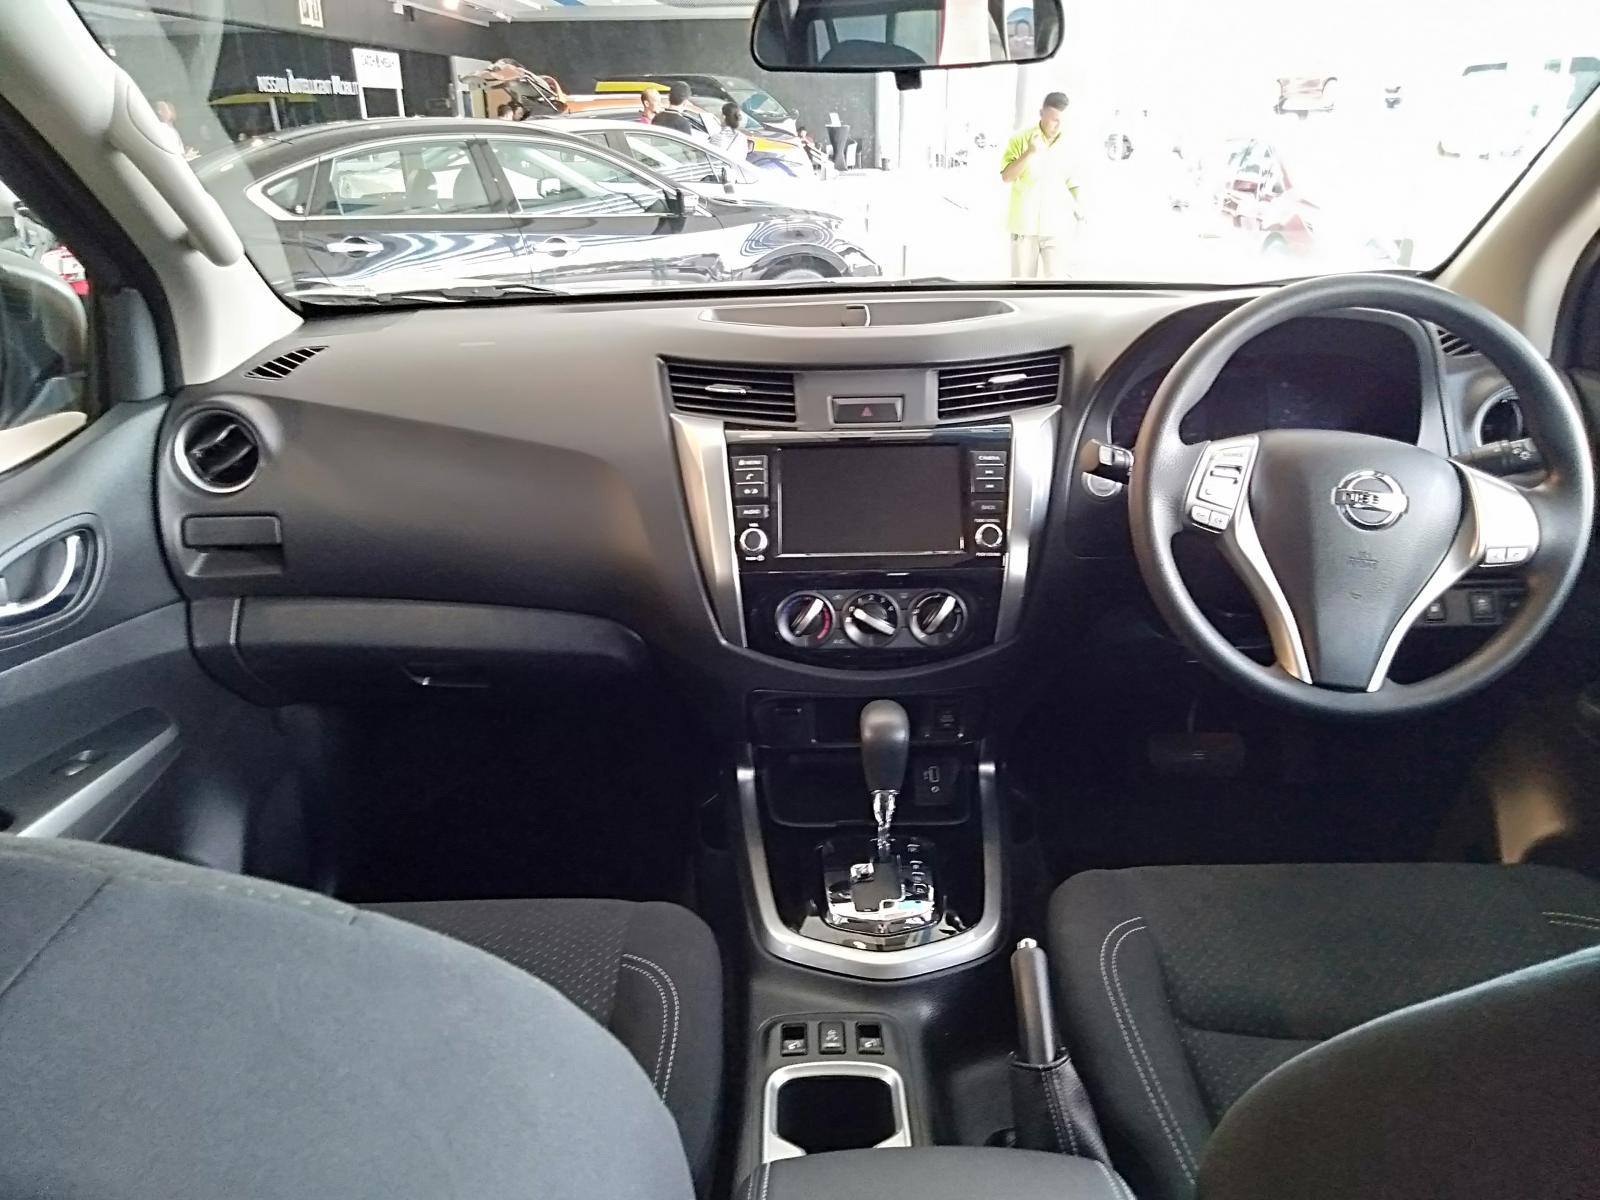 Nissan Terra Modified Interior